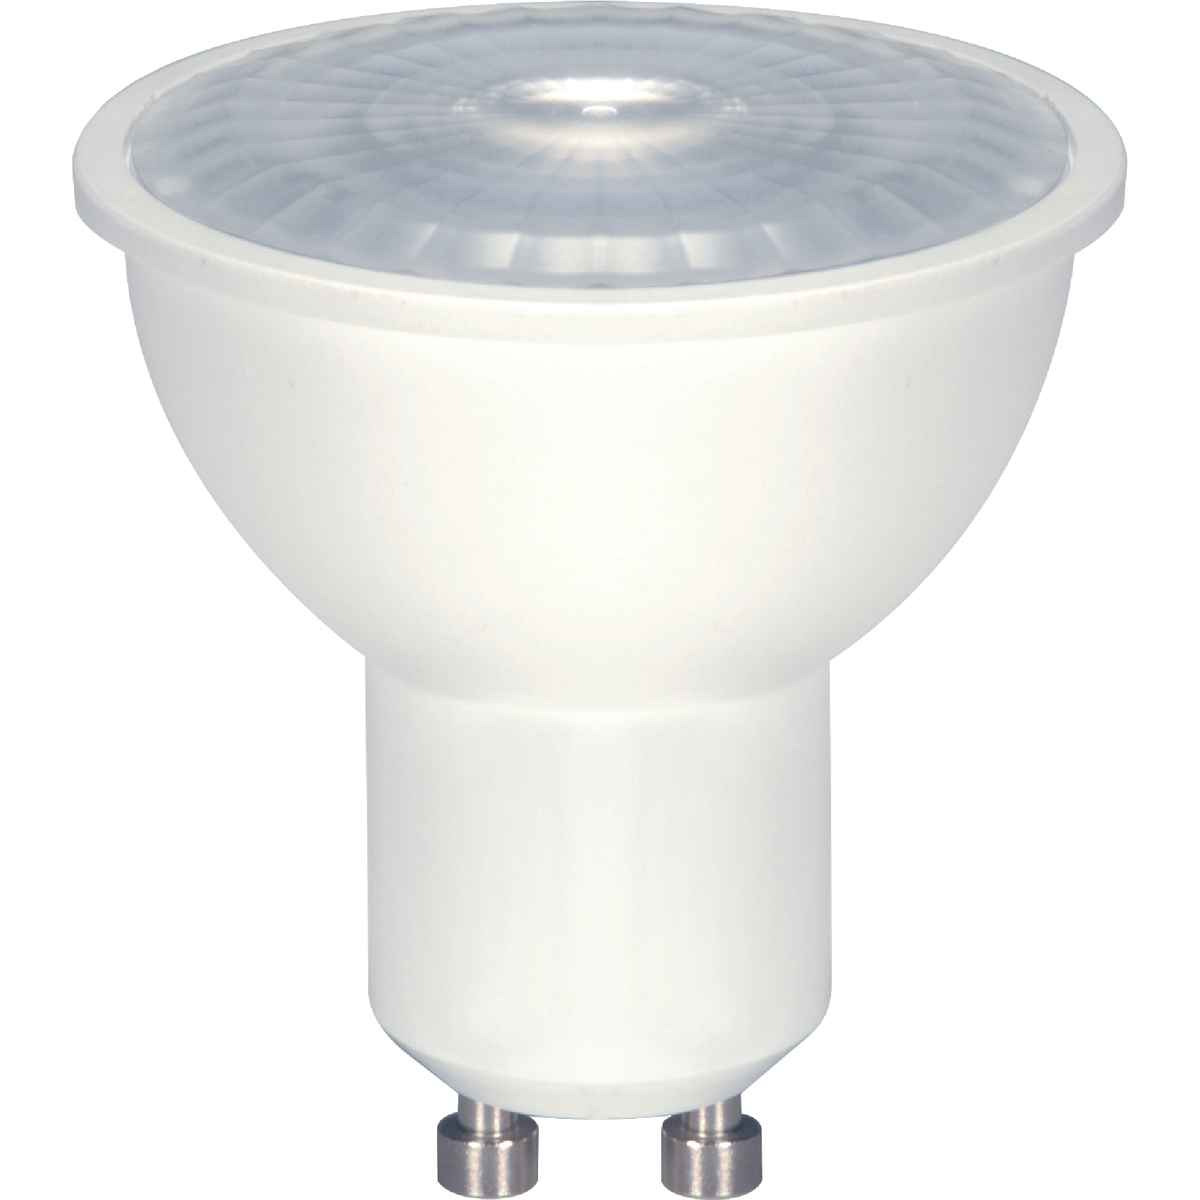 LED Floodlight Light Bulb